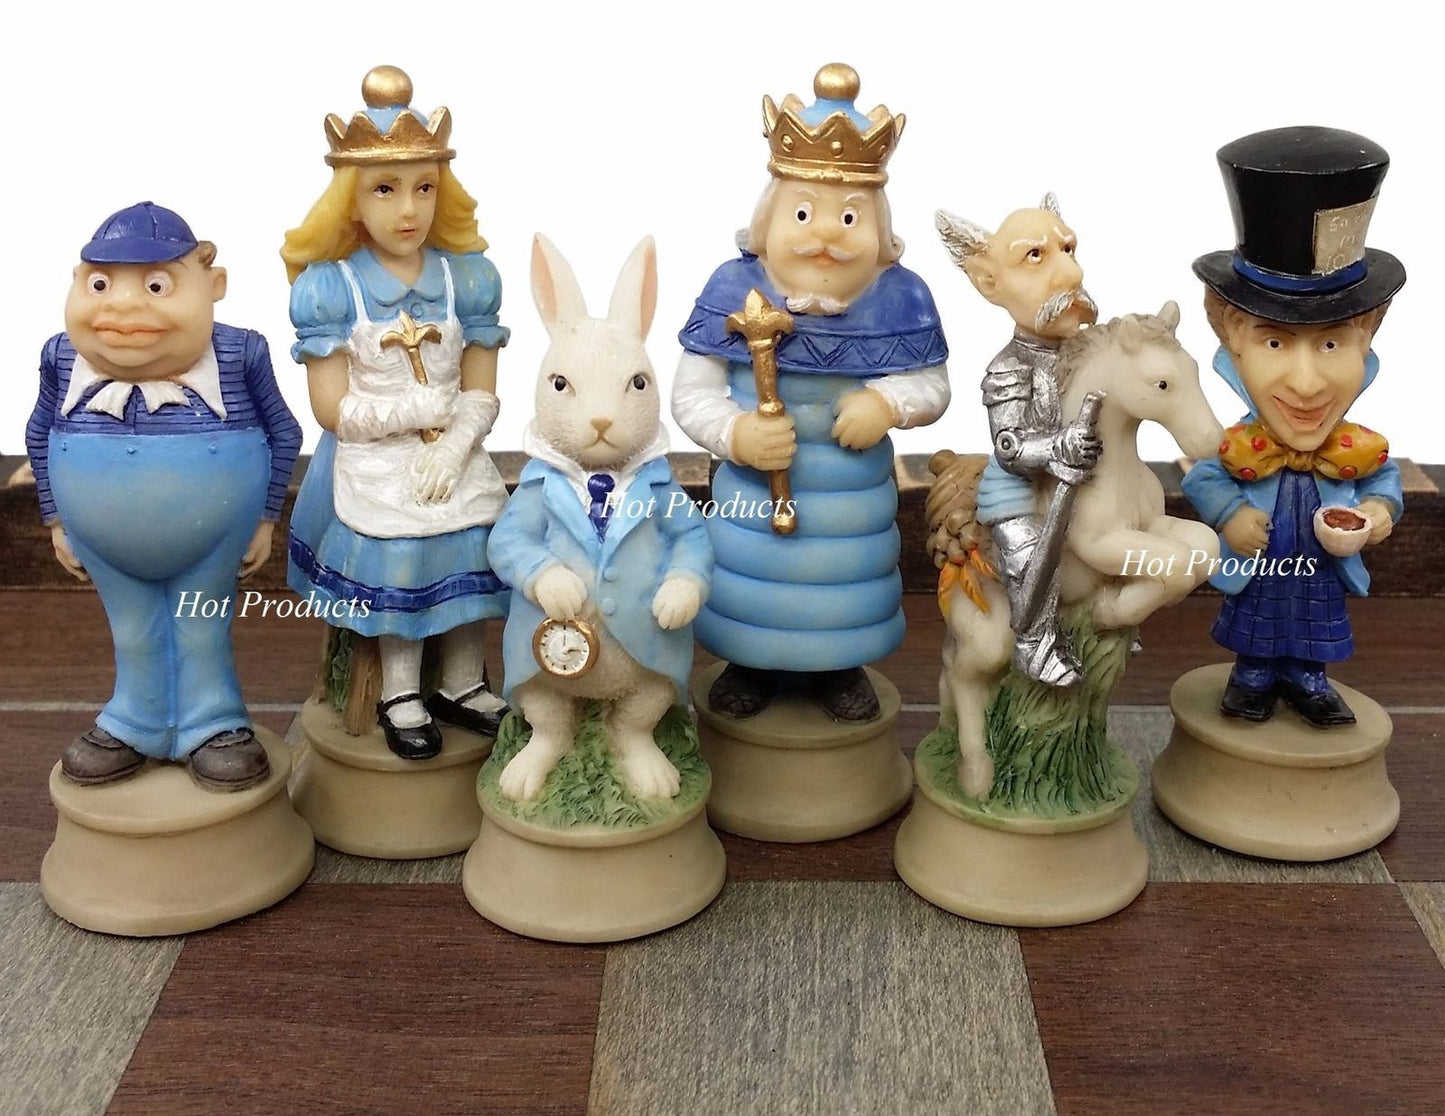 Alice in Wonderland Fantasy Chess Set W/ 17" Castle / Fortress Board